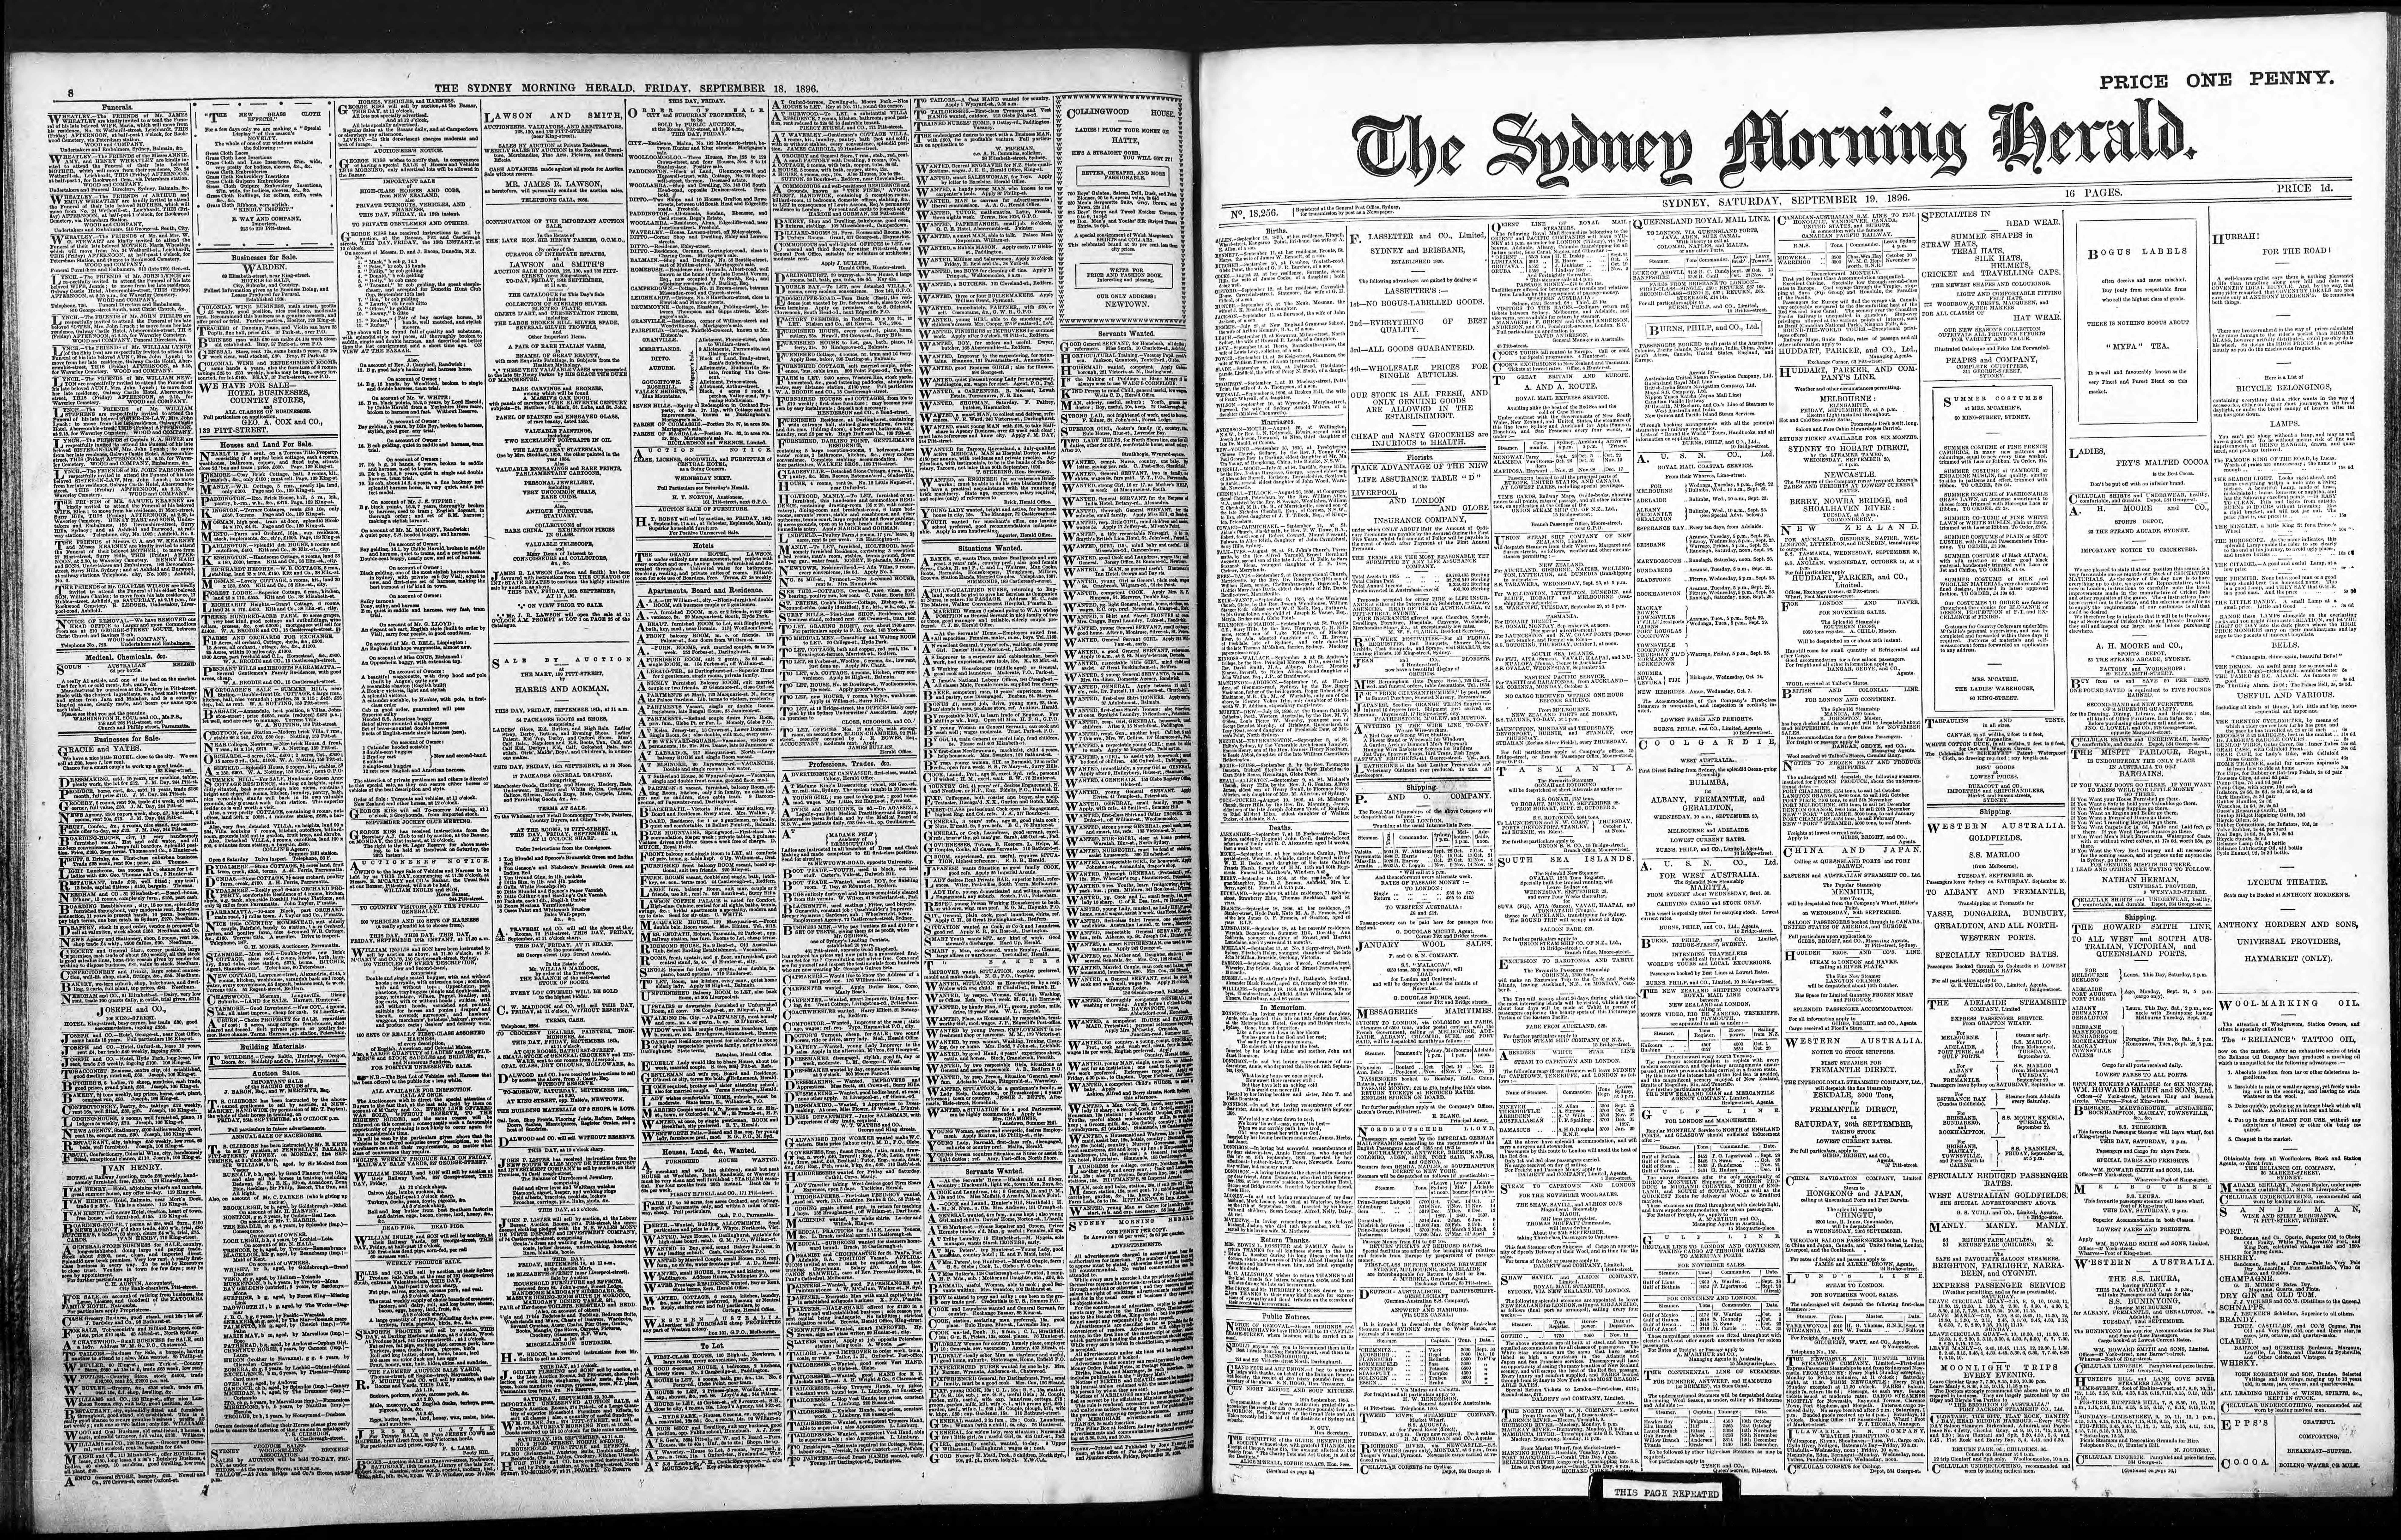 Australia, Newspaper Vital Notices, 1841-2001